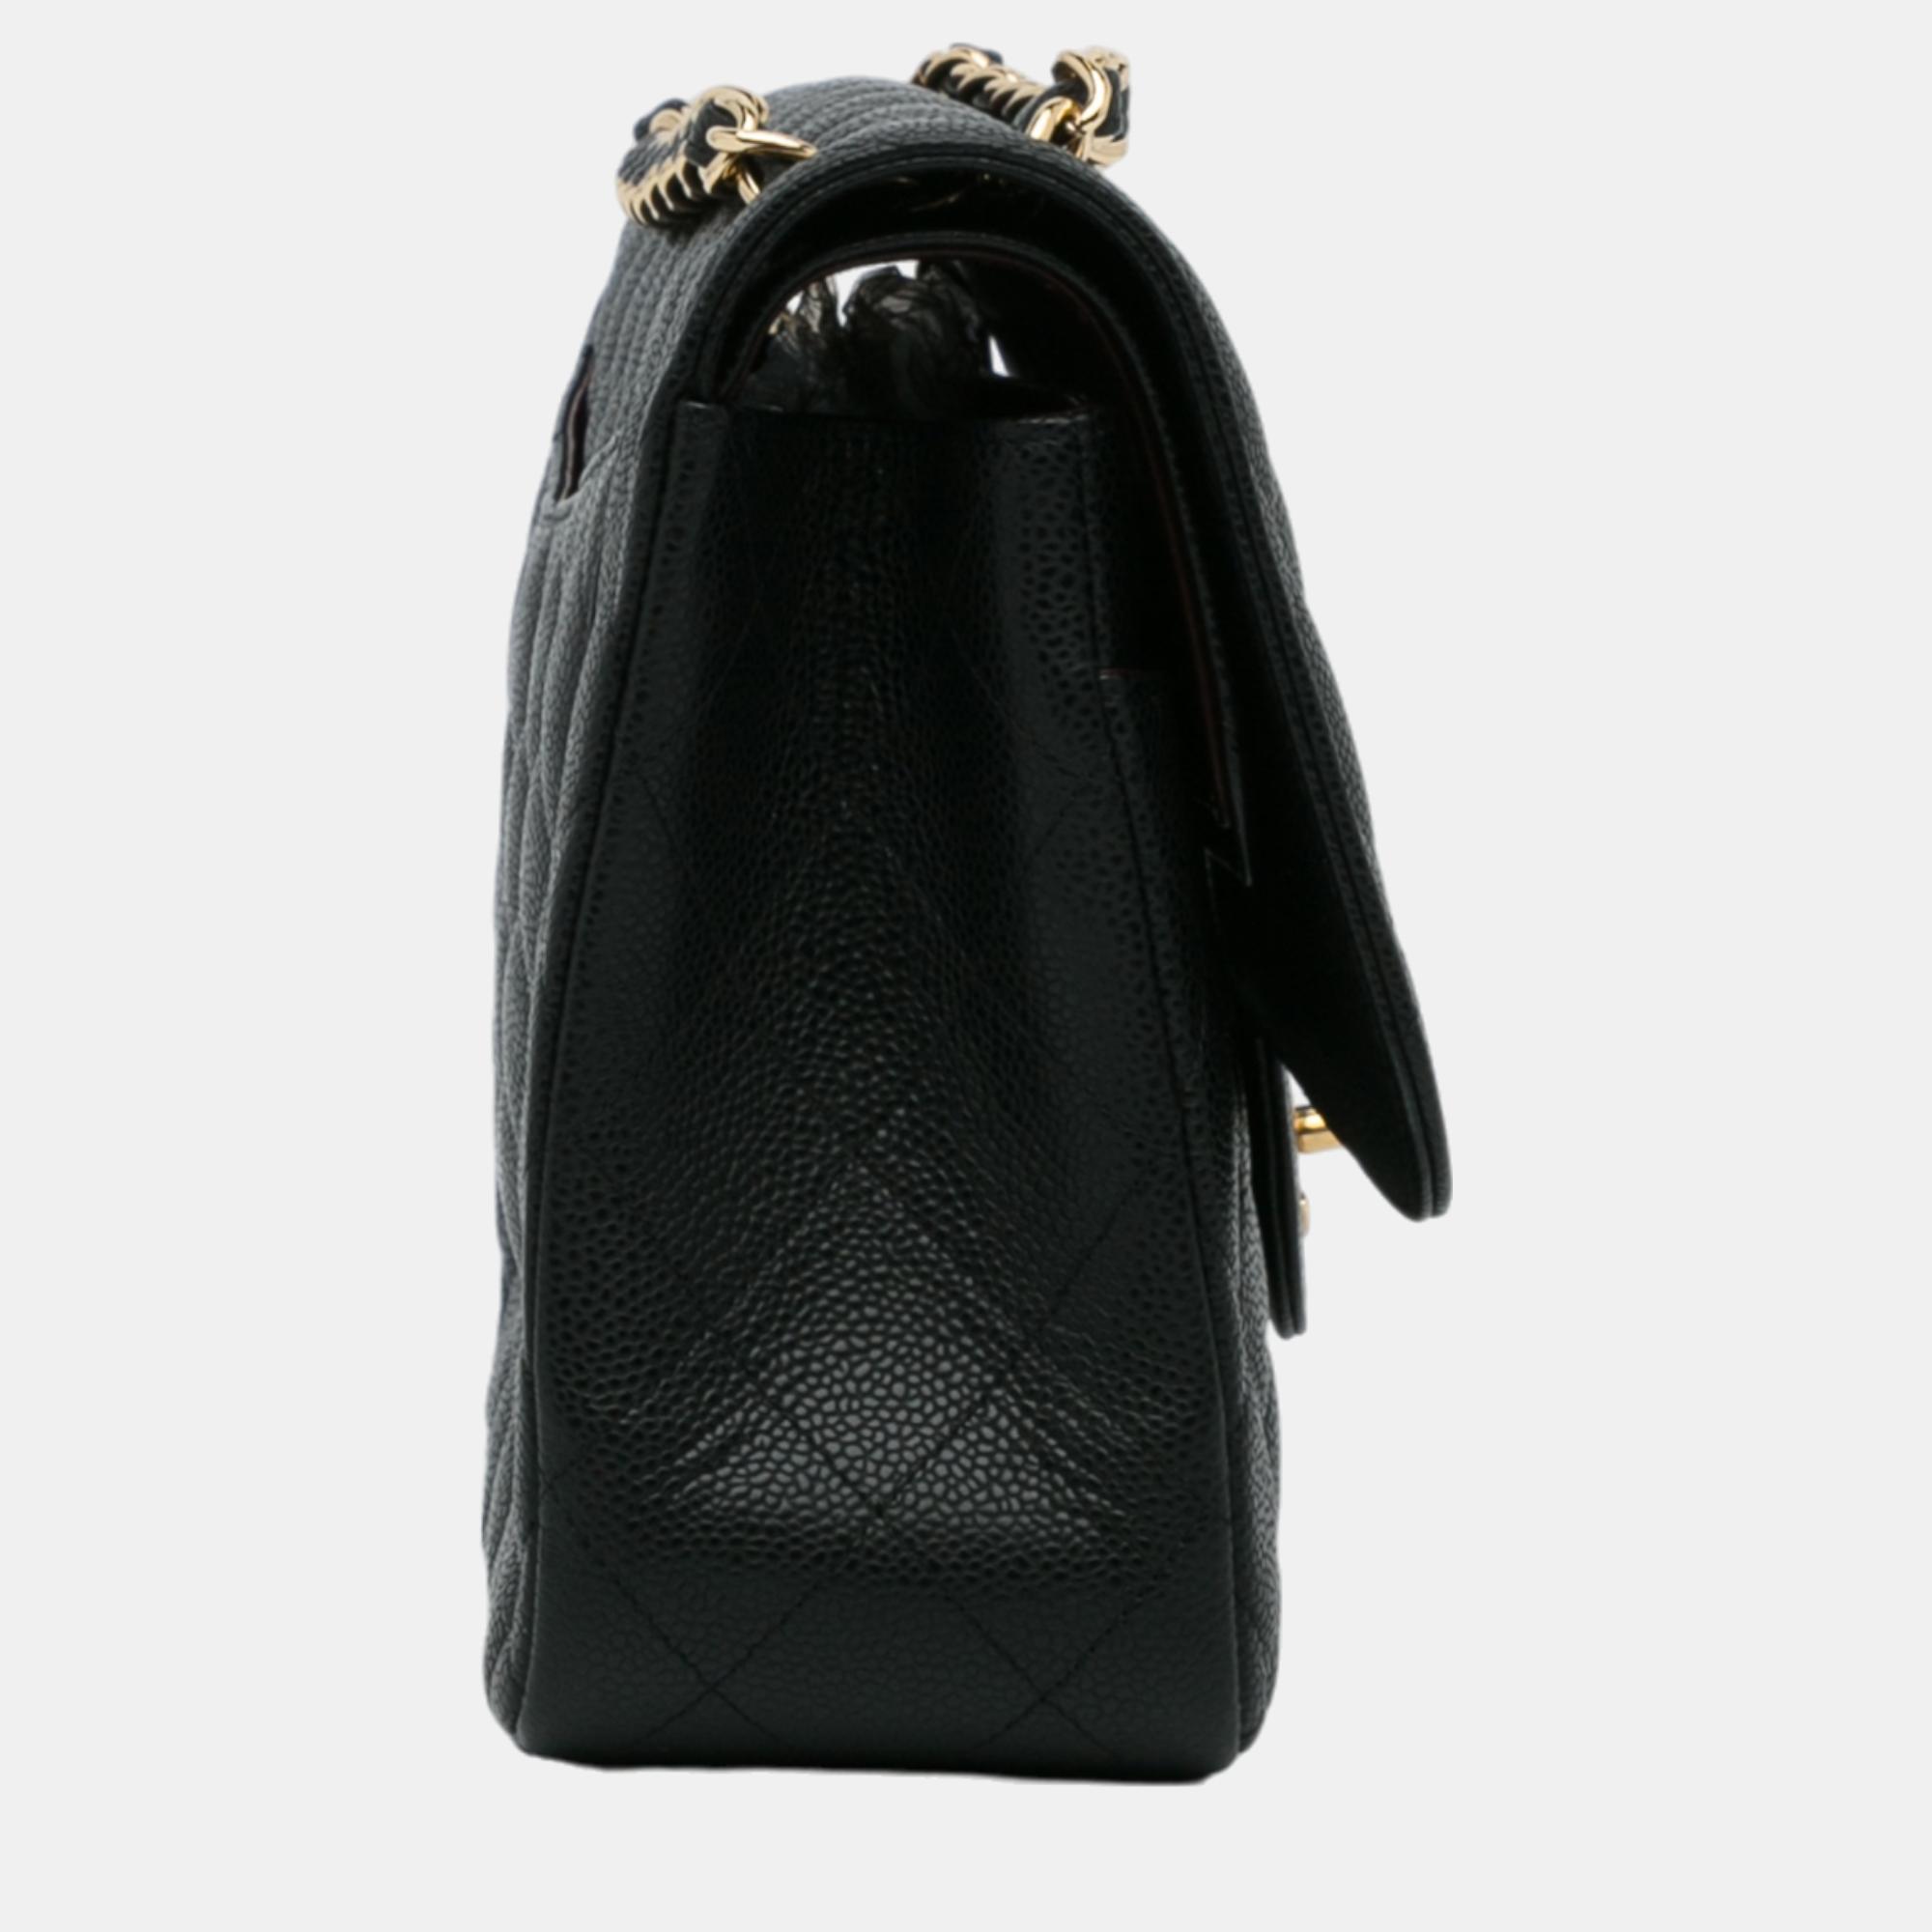 Chanel Black Jumbo Classic Caviar Single Flap Bag